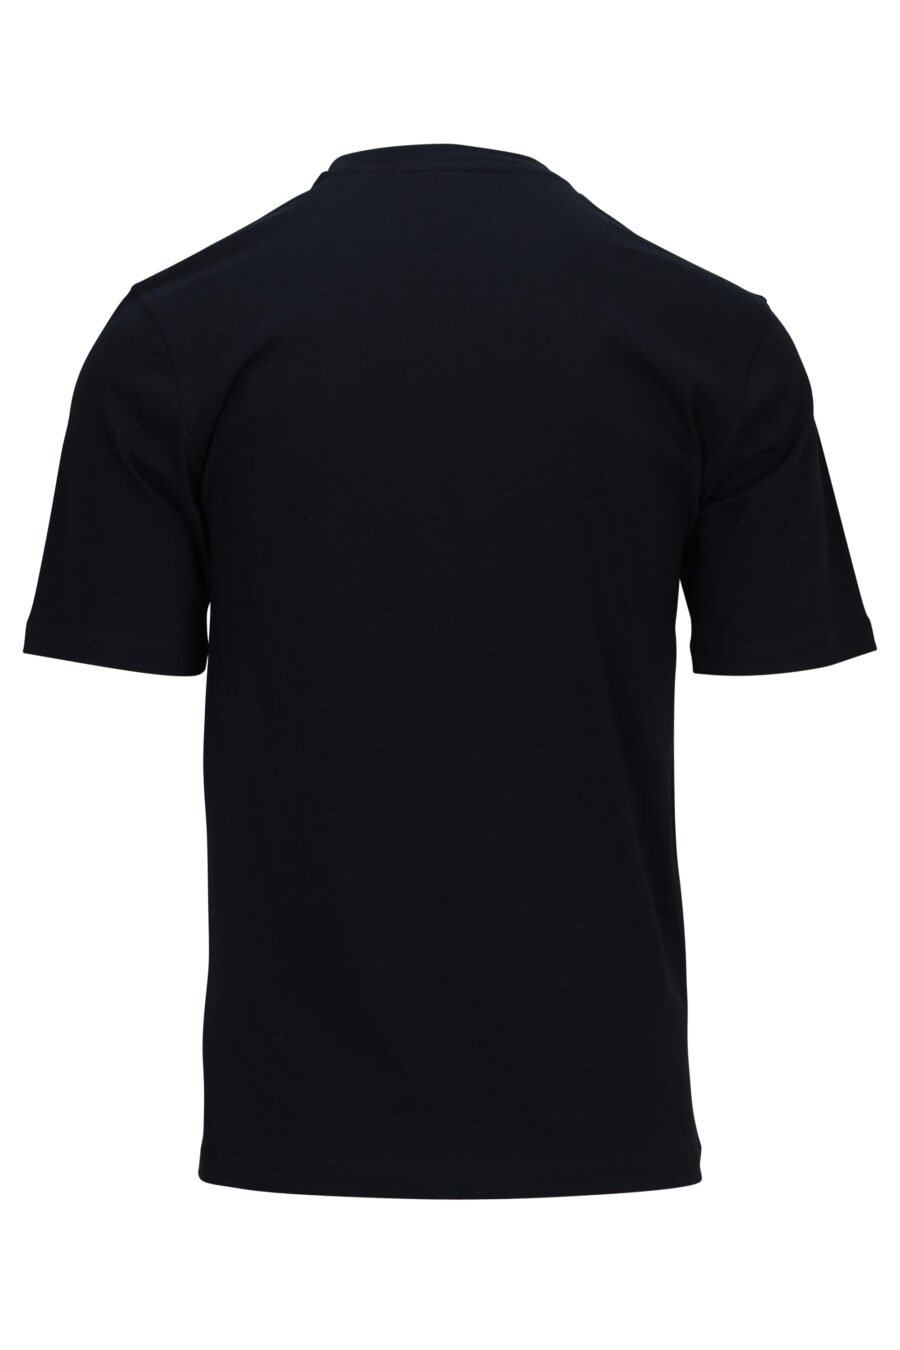 Camiseta negra con minilogo "teddy sastre" - 667113108179 1